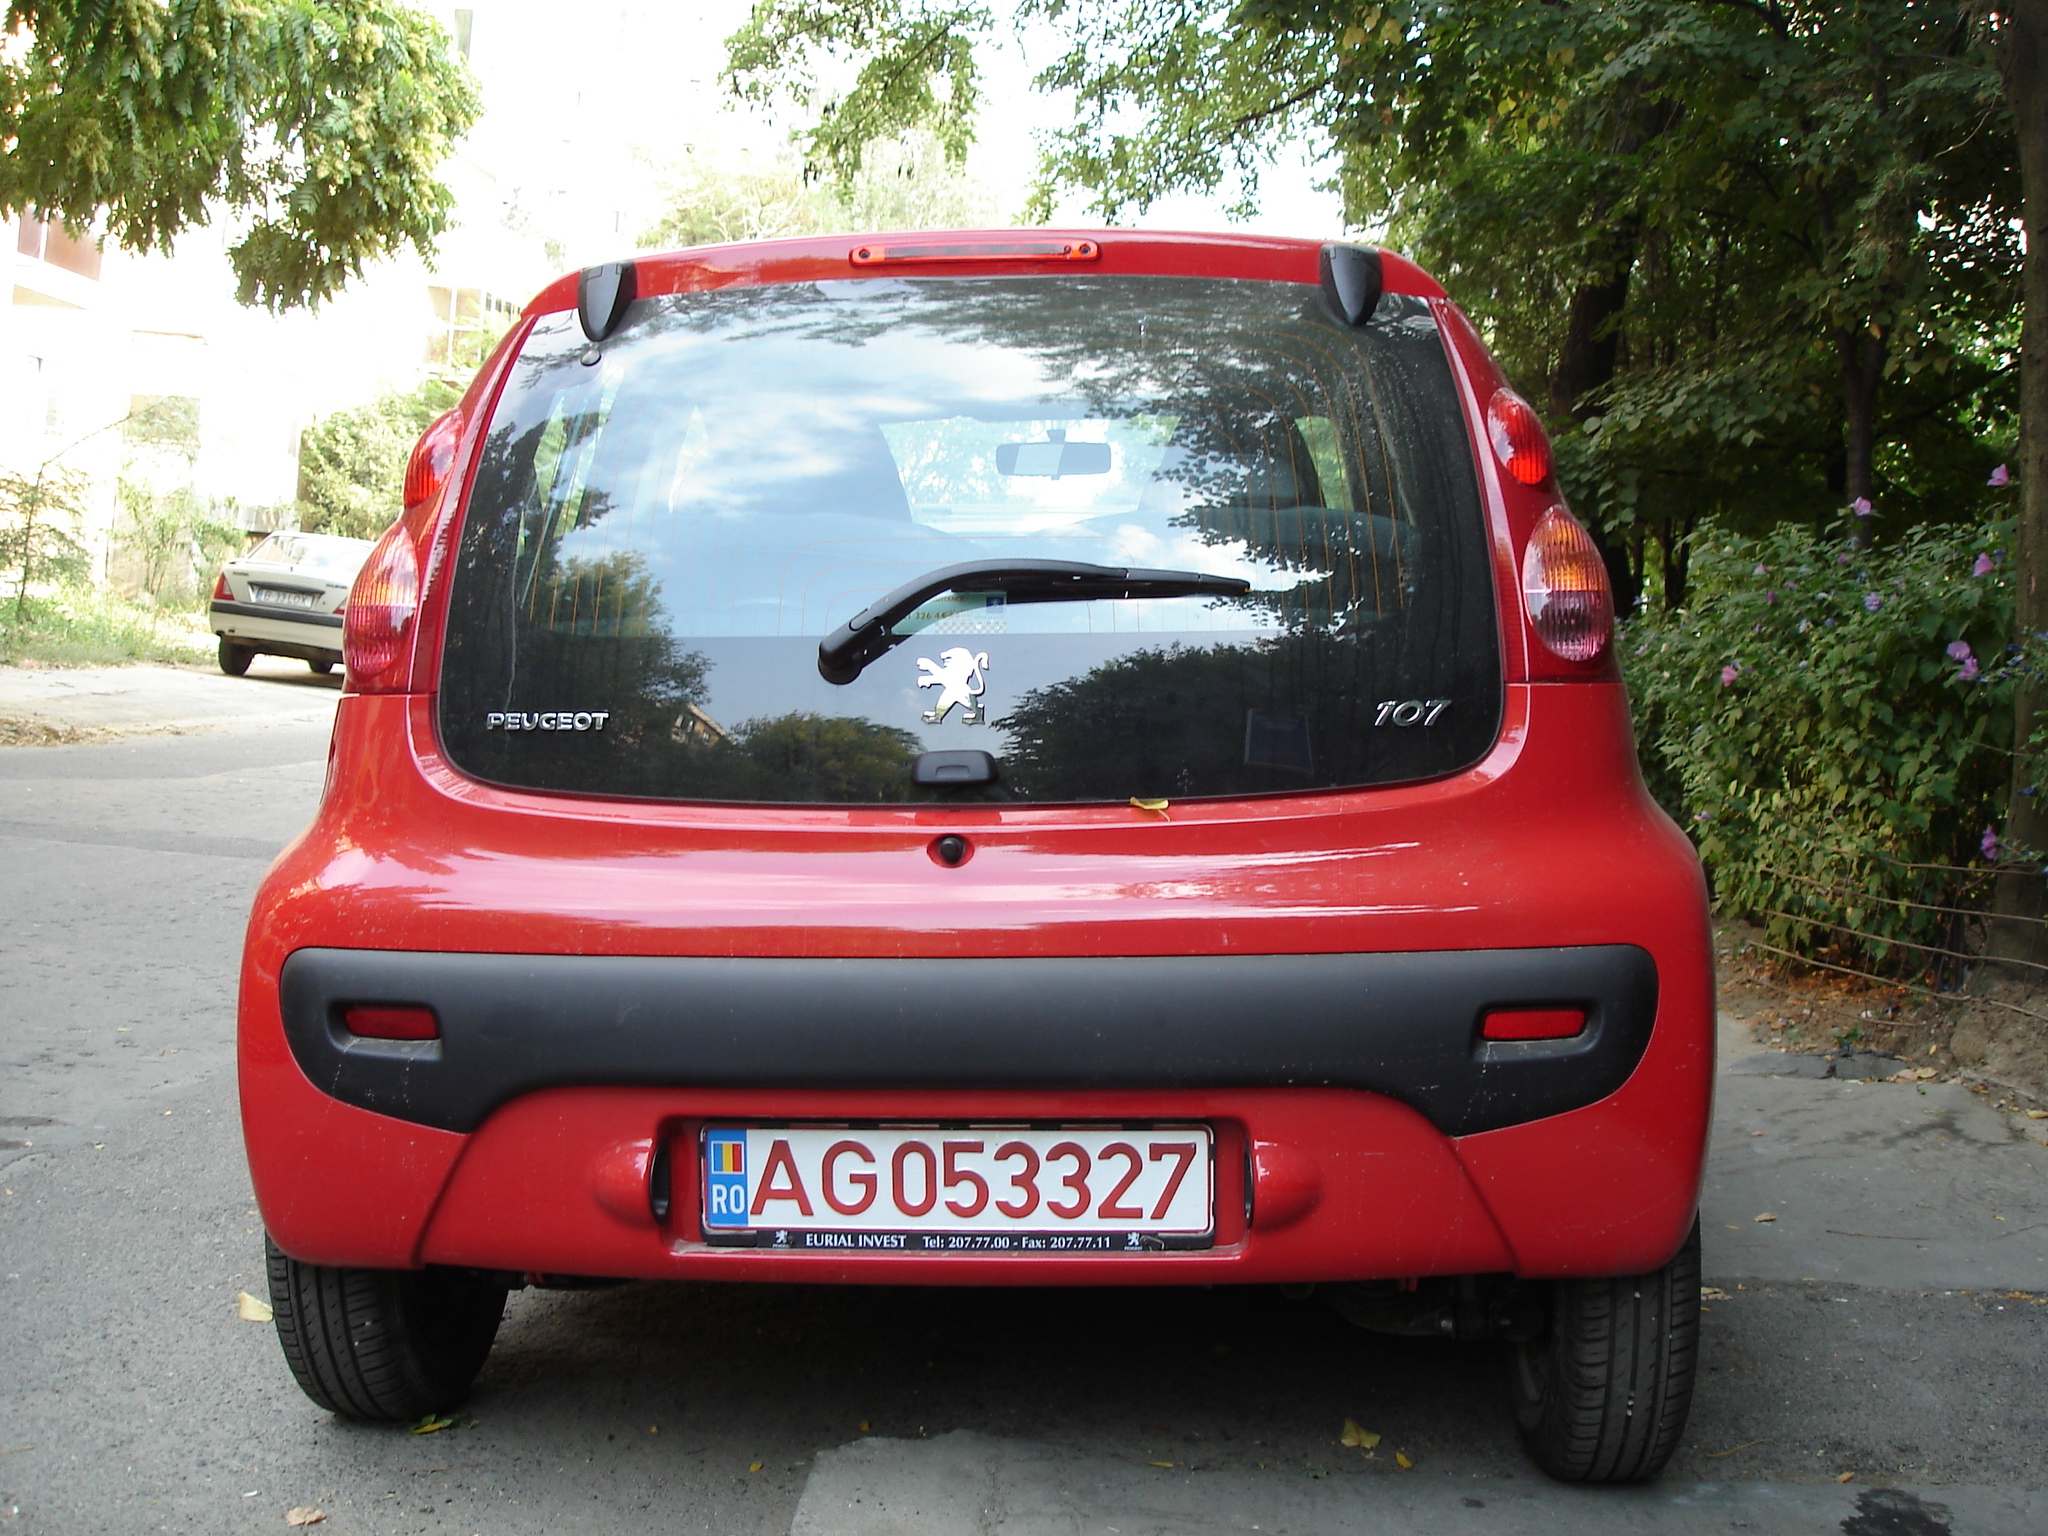 File:Peugeot 107 red back.jpg - Wikimedia Commons